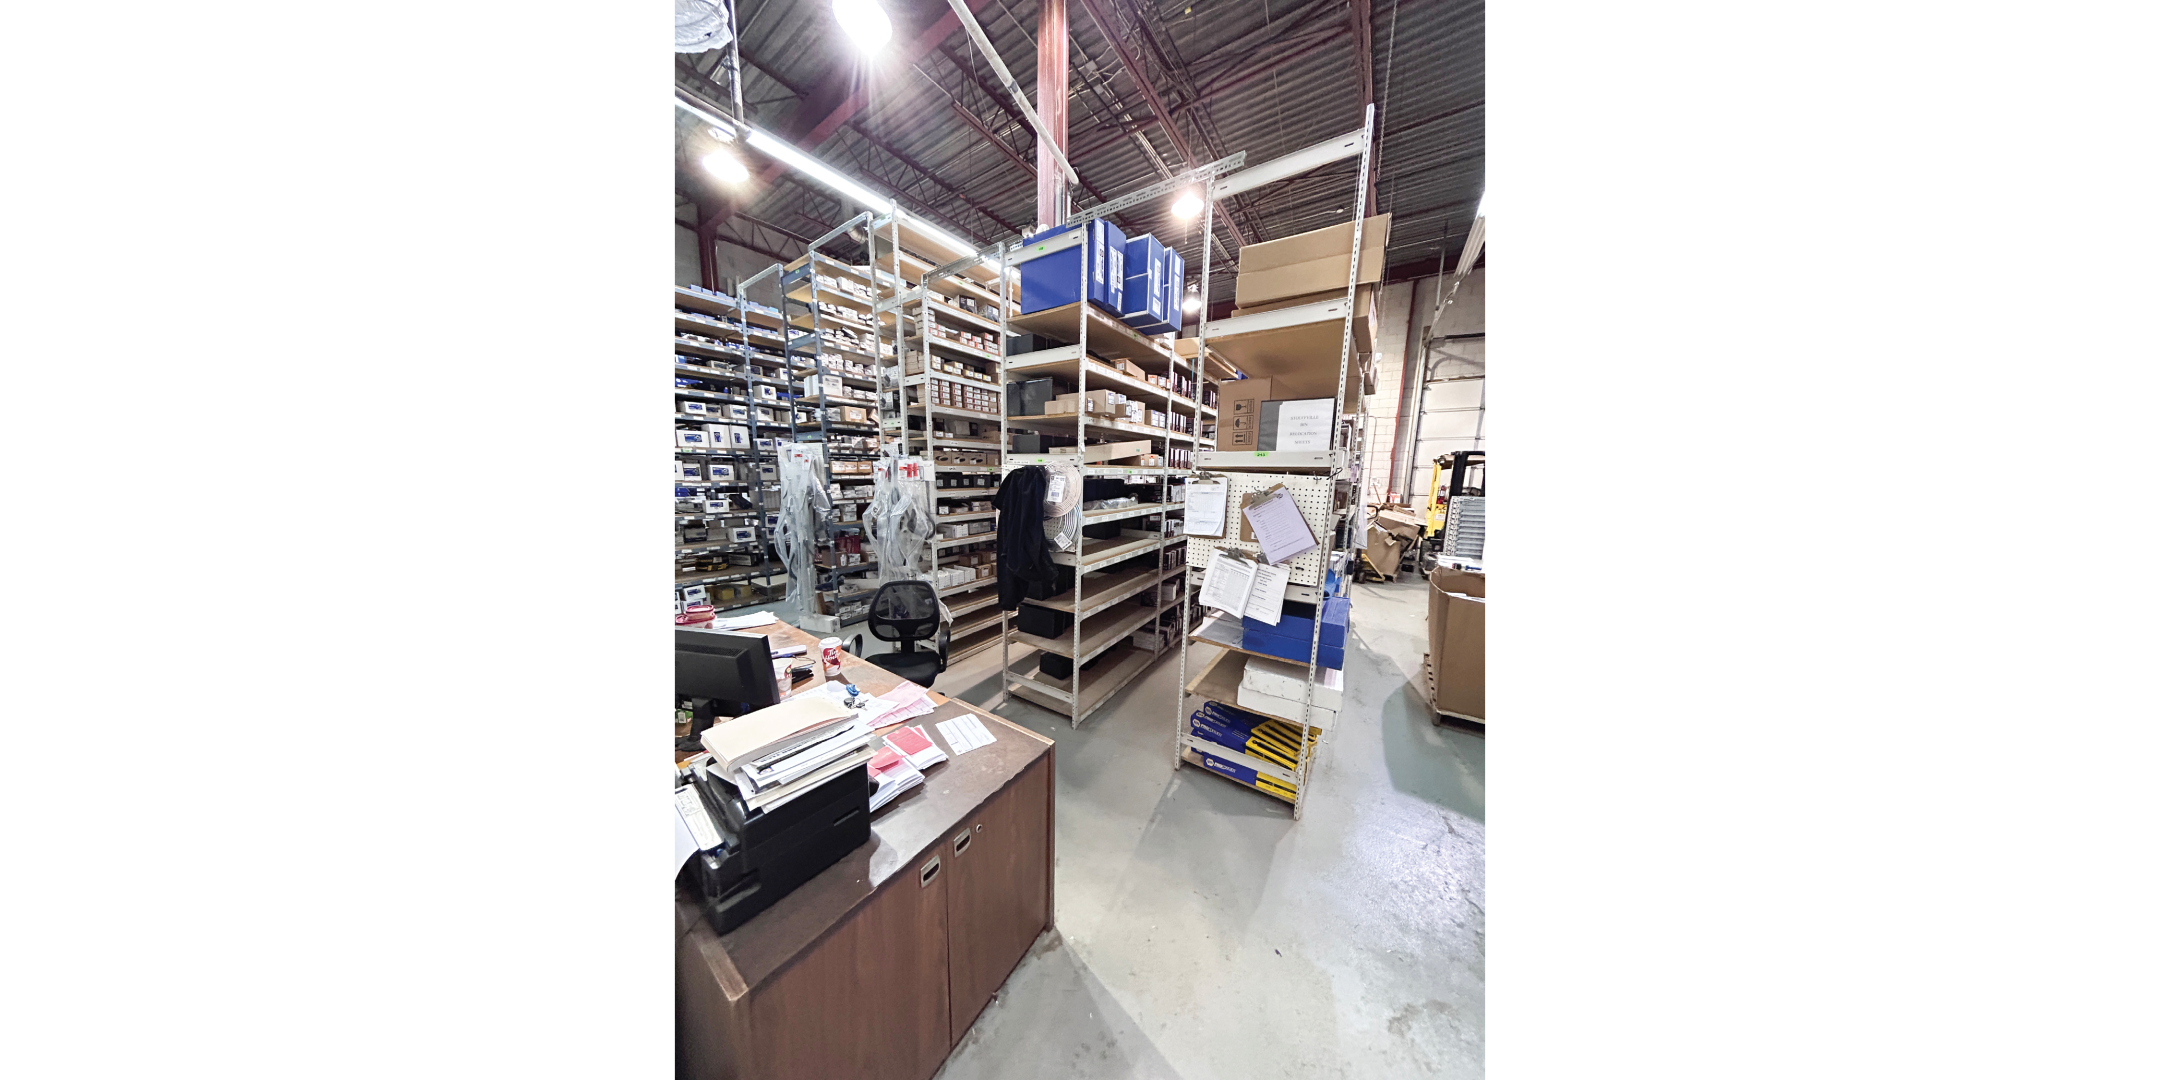 118 Sandiford Warehouse Space with Shelf Racking